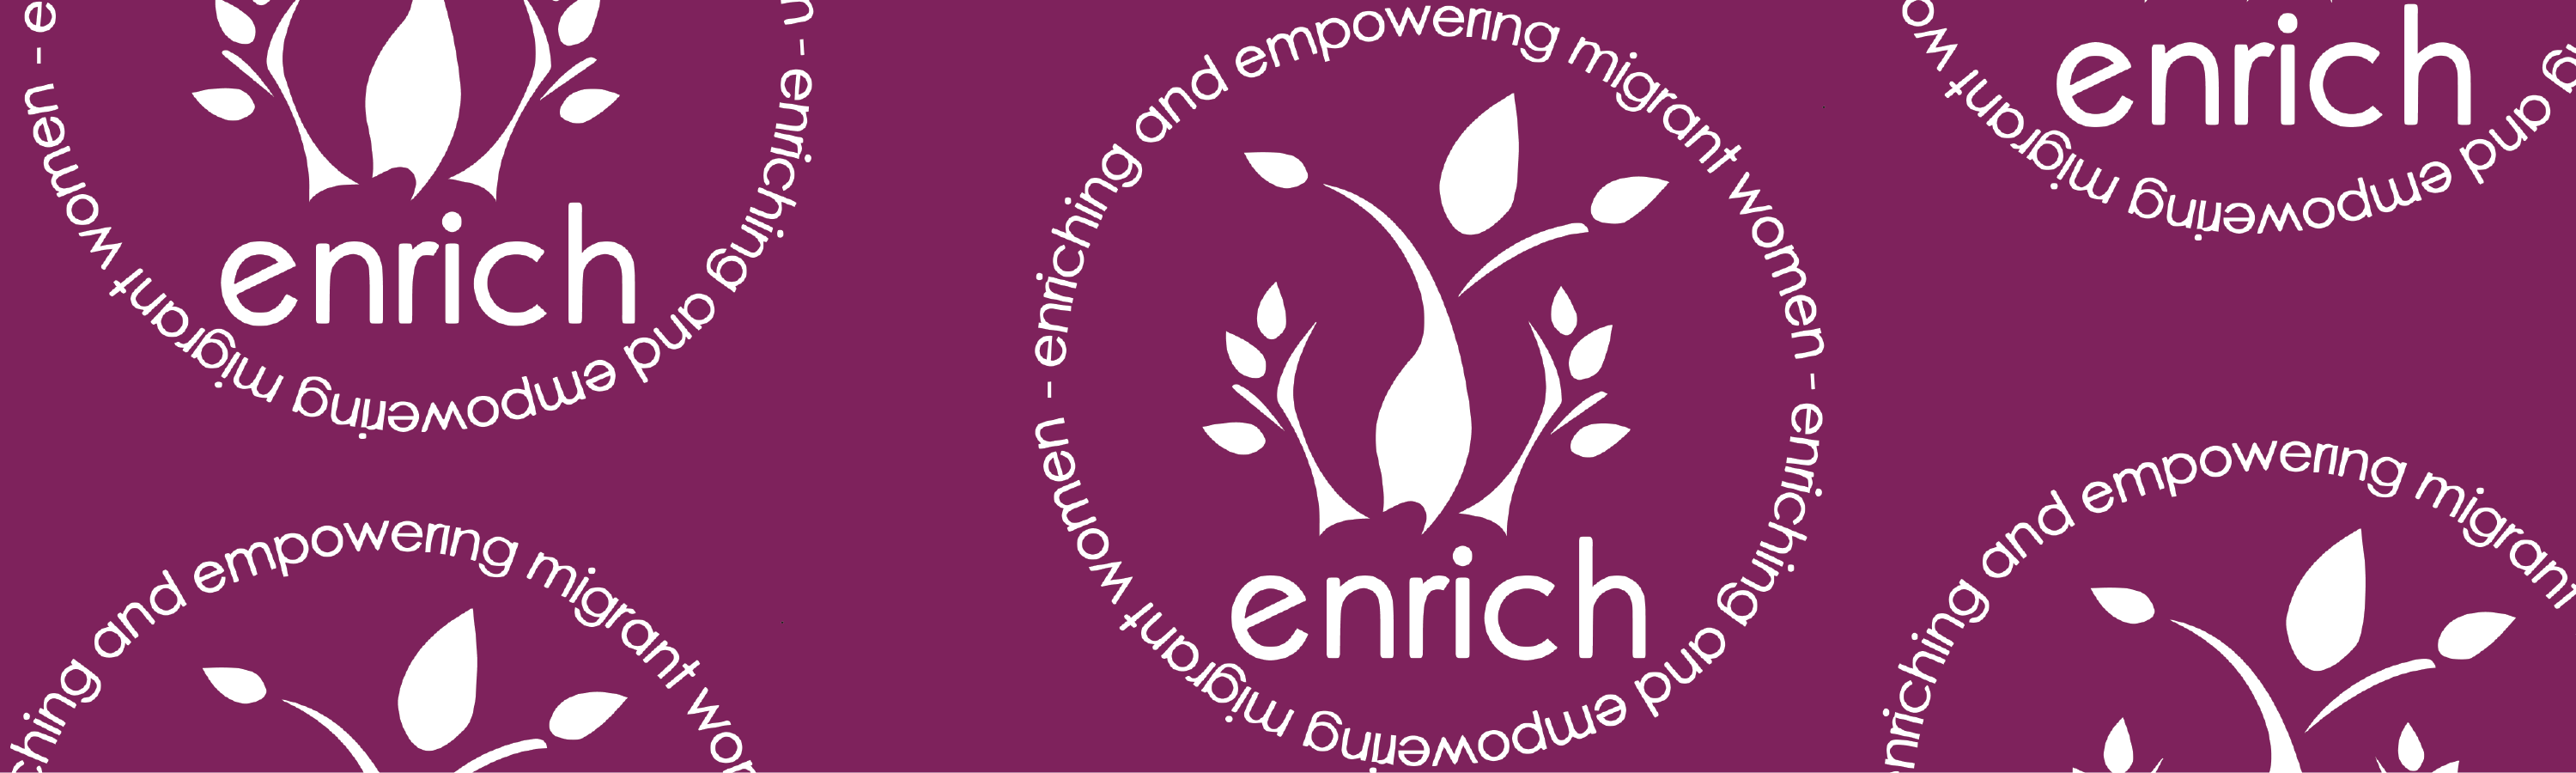 Enrich white logo on purple background